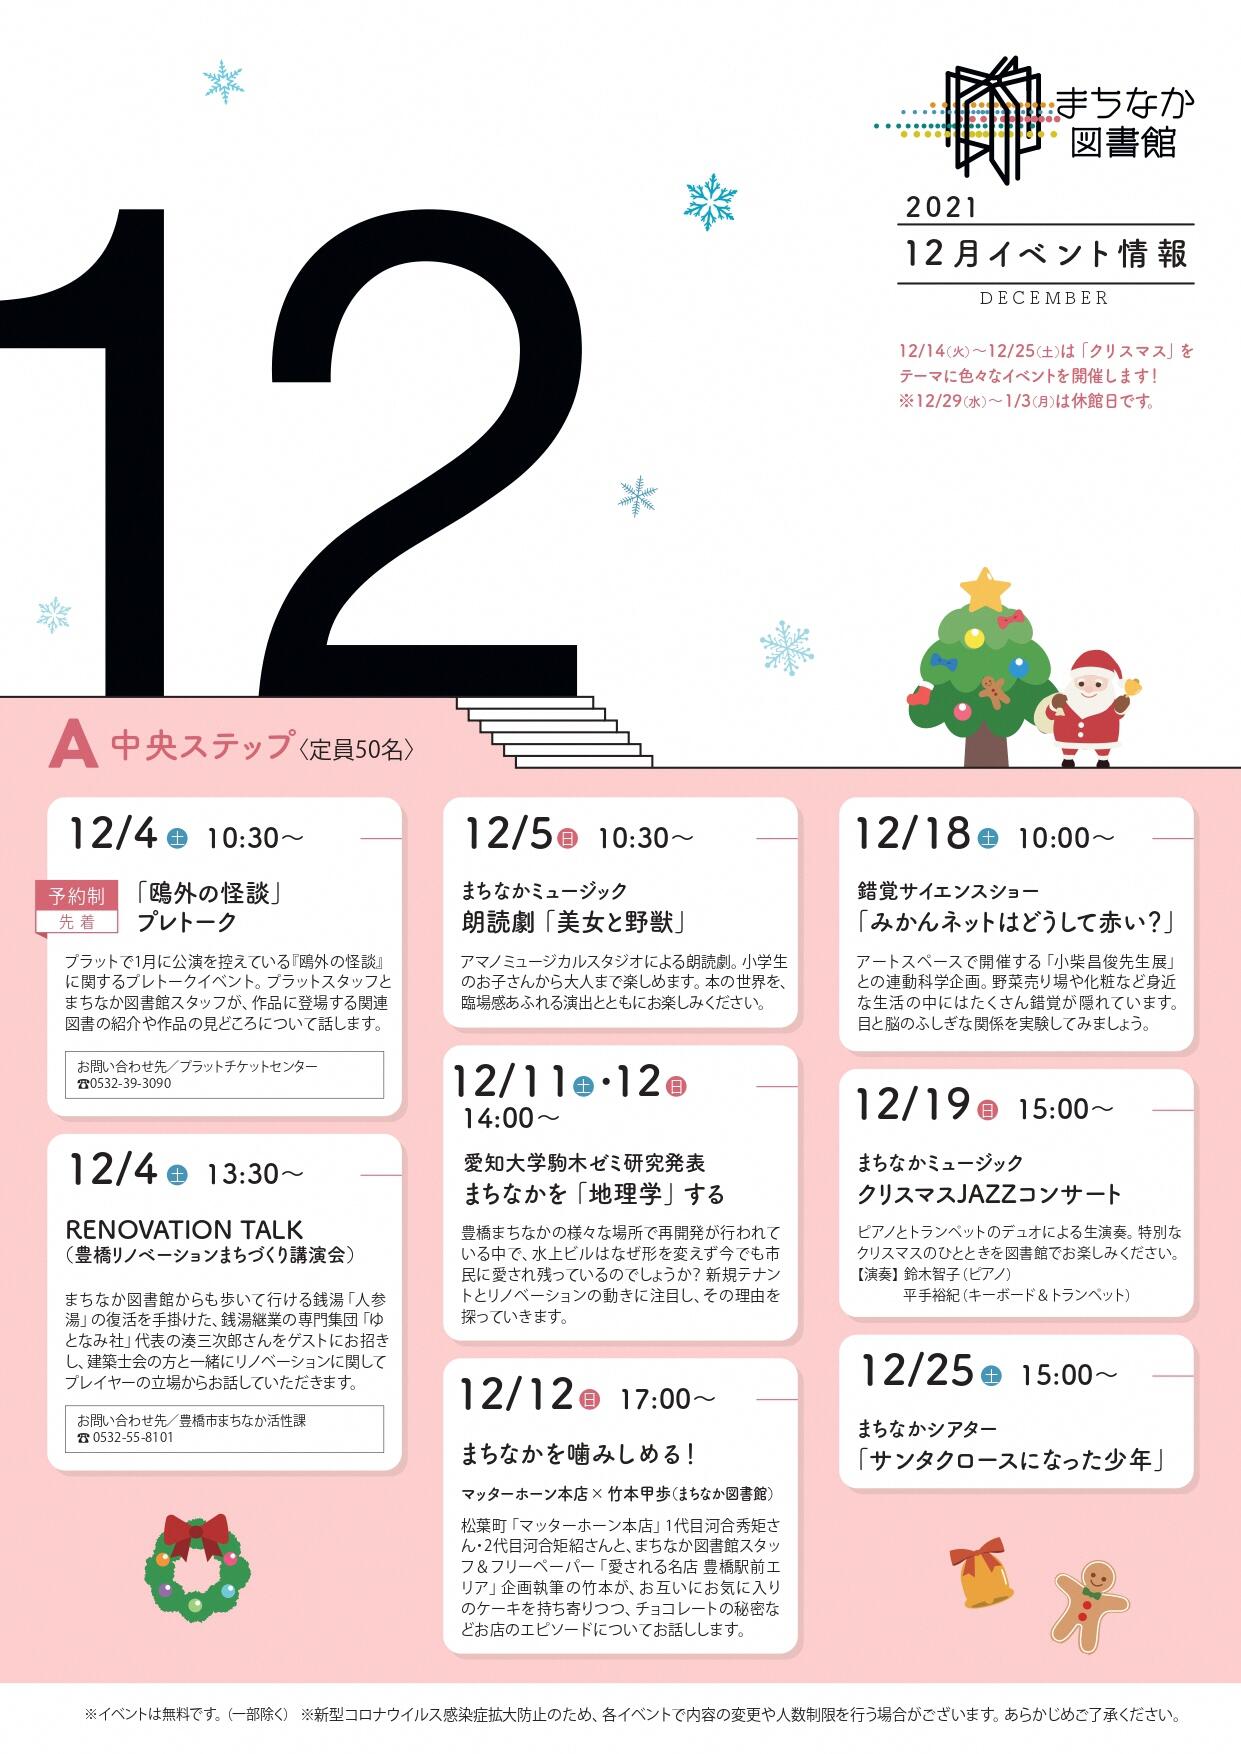 https://www.library.toyohashi.aichi.jp/facility/machinaka/event/bf6c65af2a7576e05919aca22cd3761f.jpg